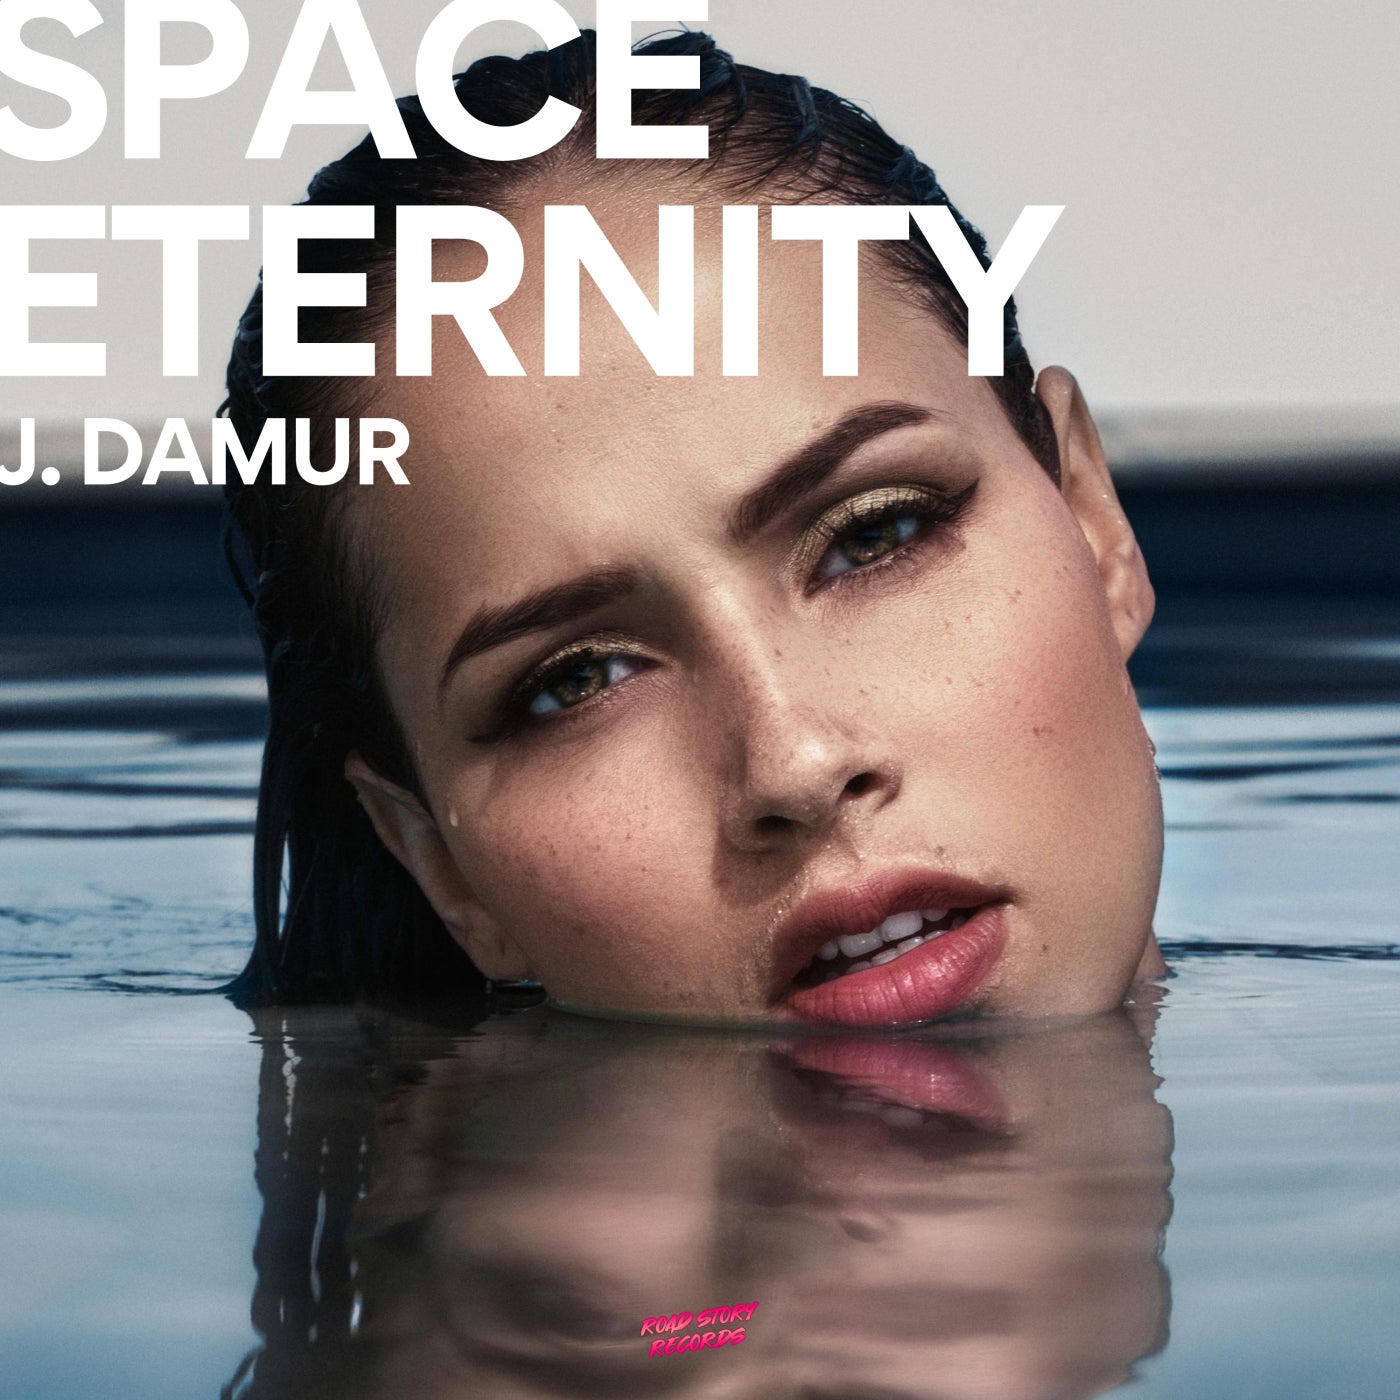 Space Eternity